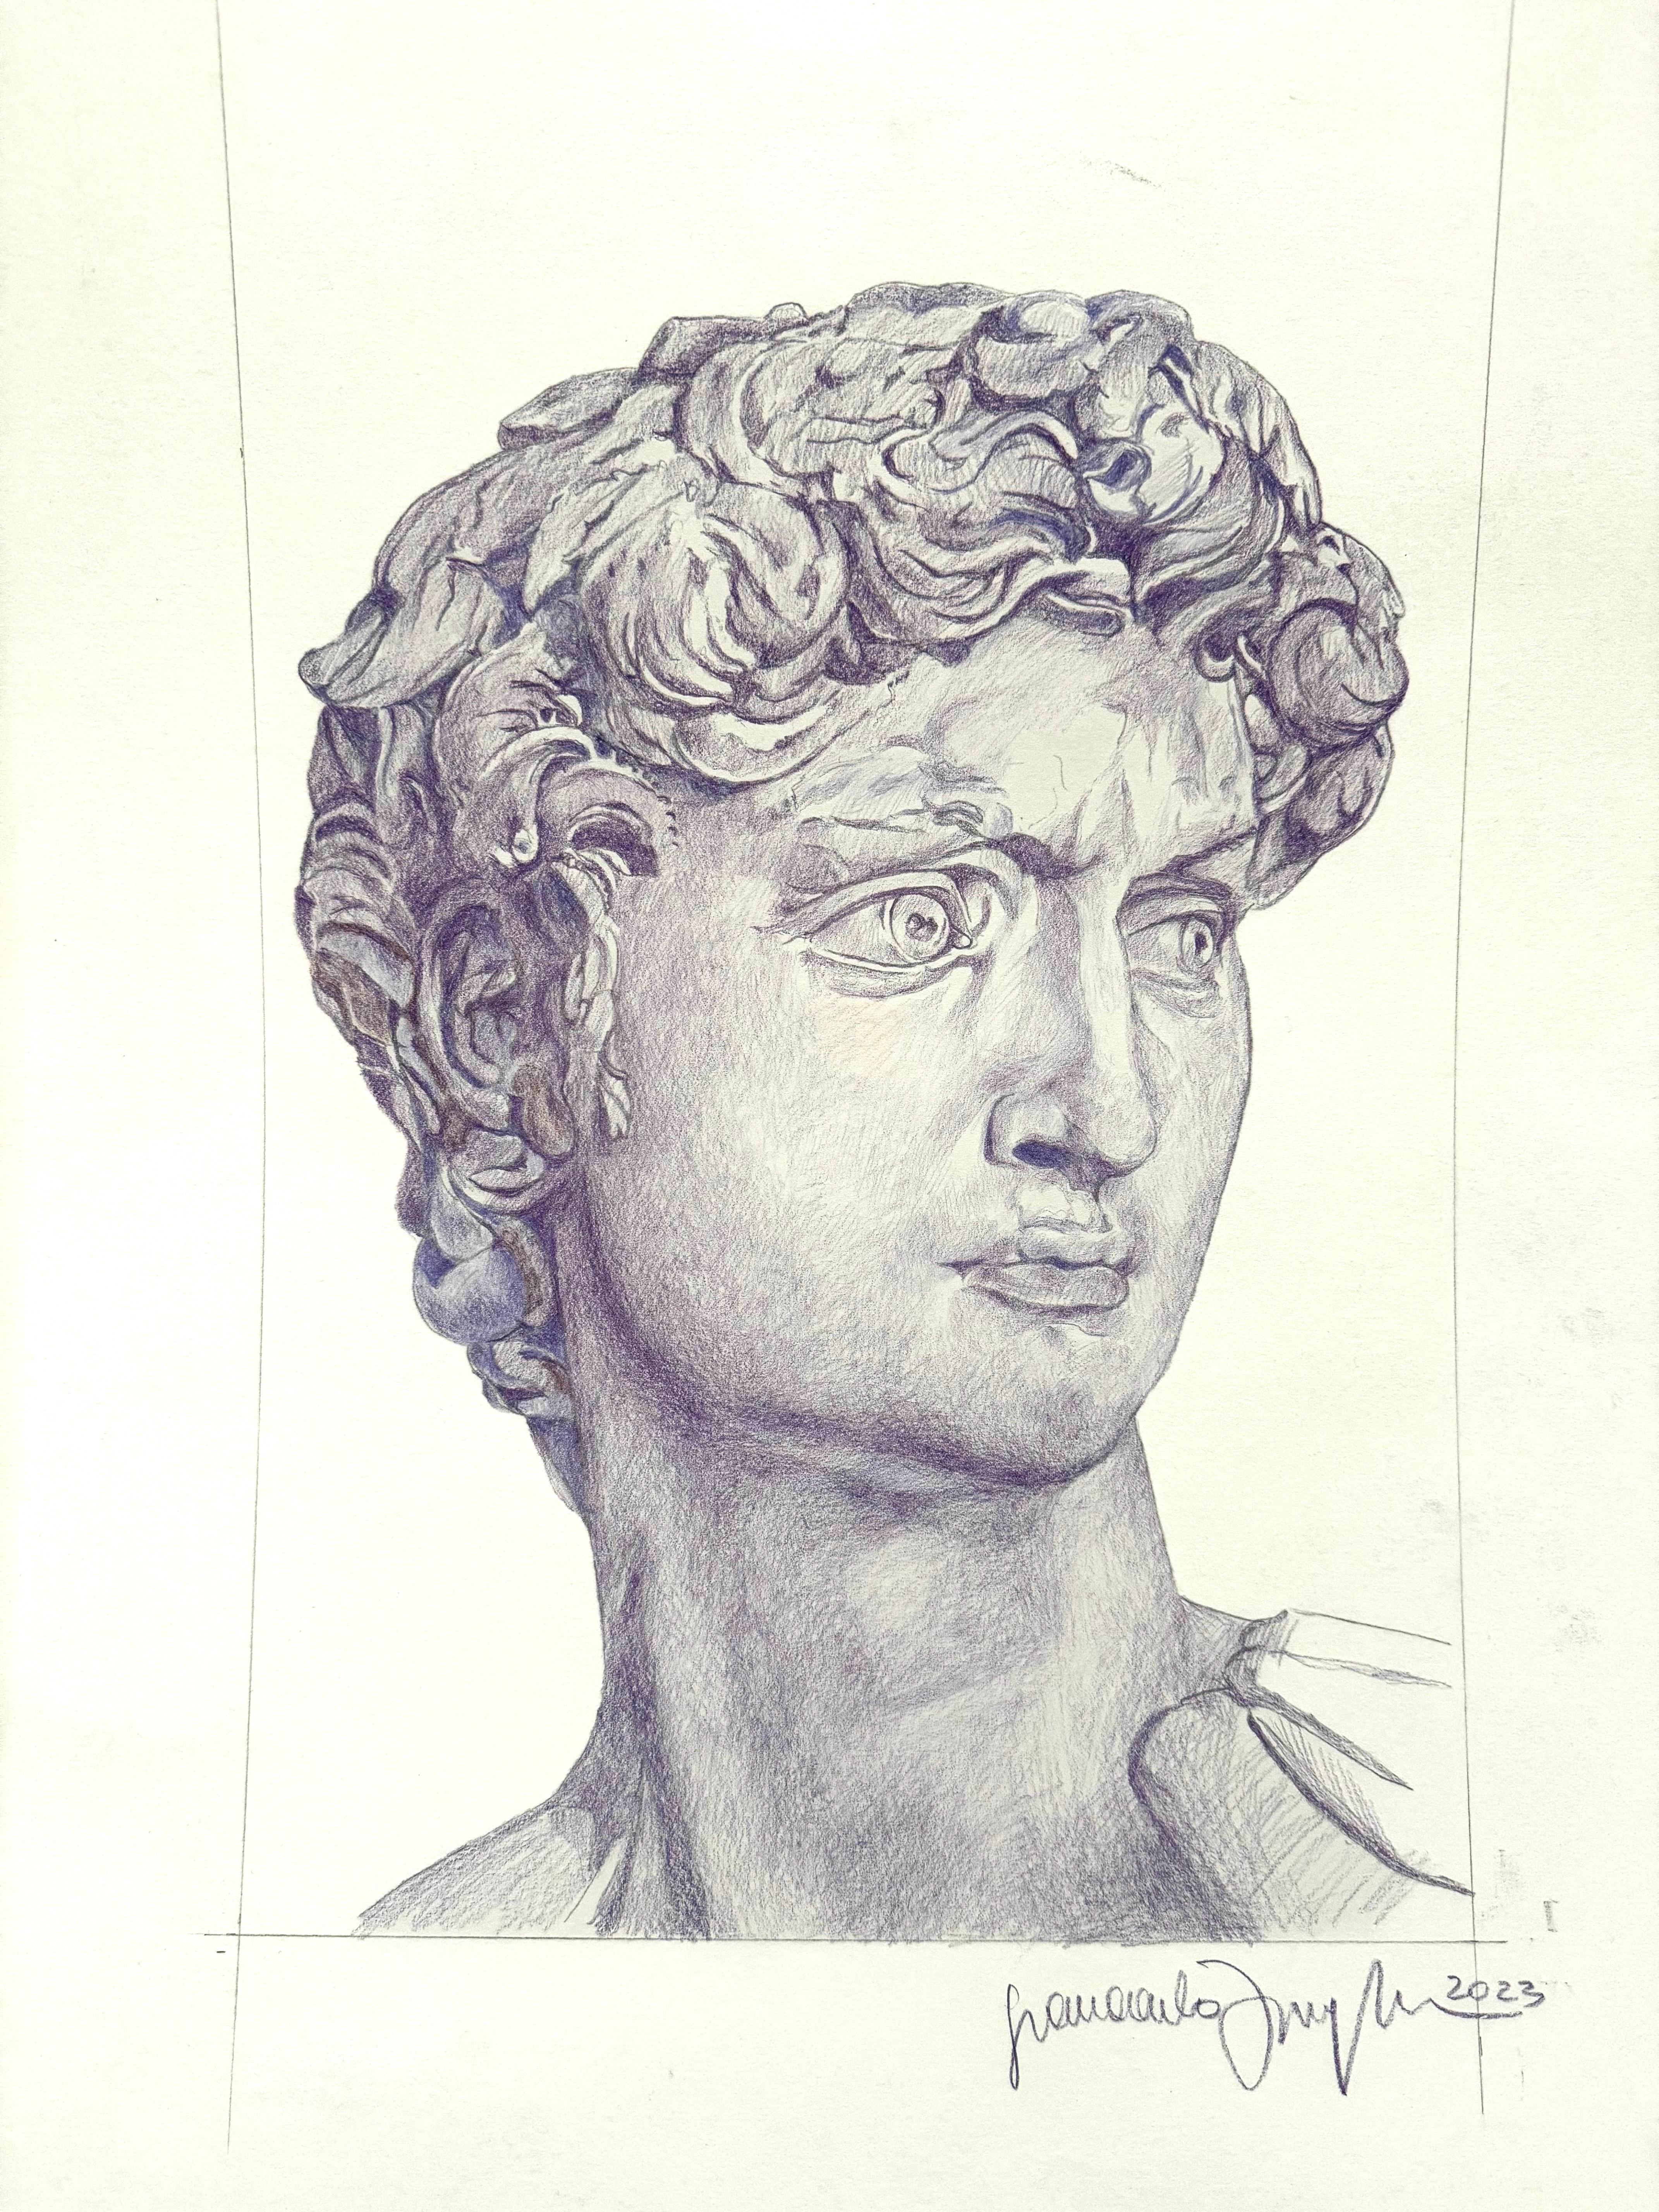 Giancarlo Impiglia Figurative Art - Incredible sketch of Michelangelo's David